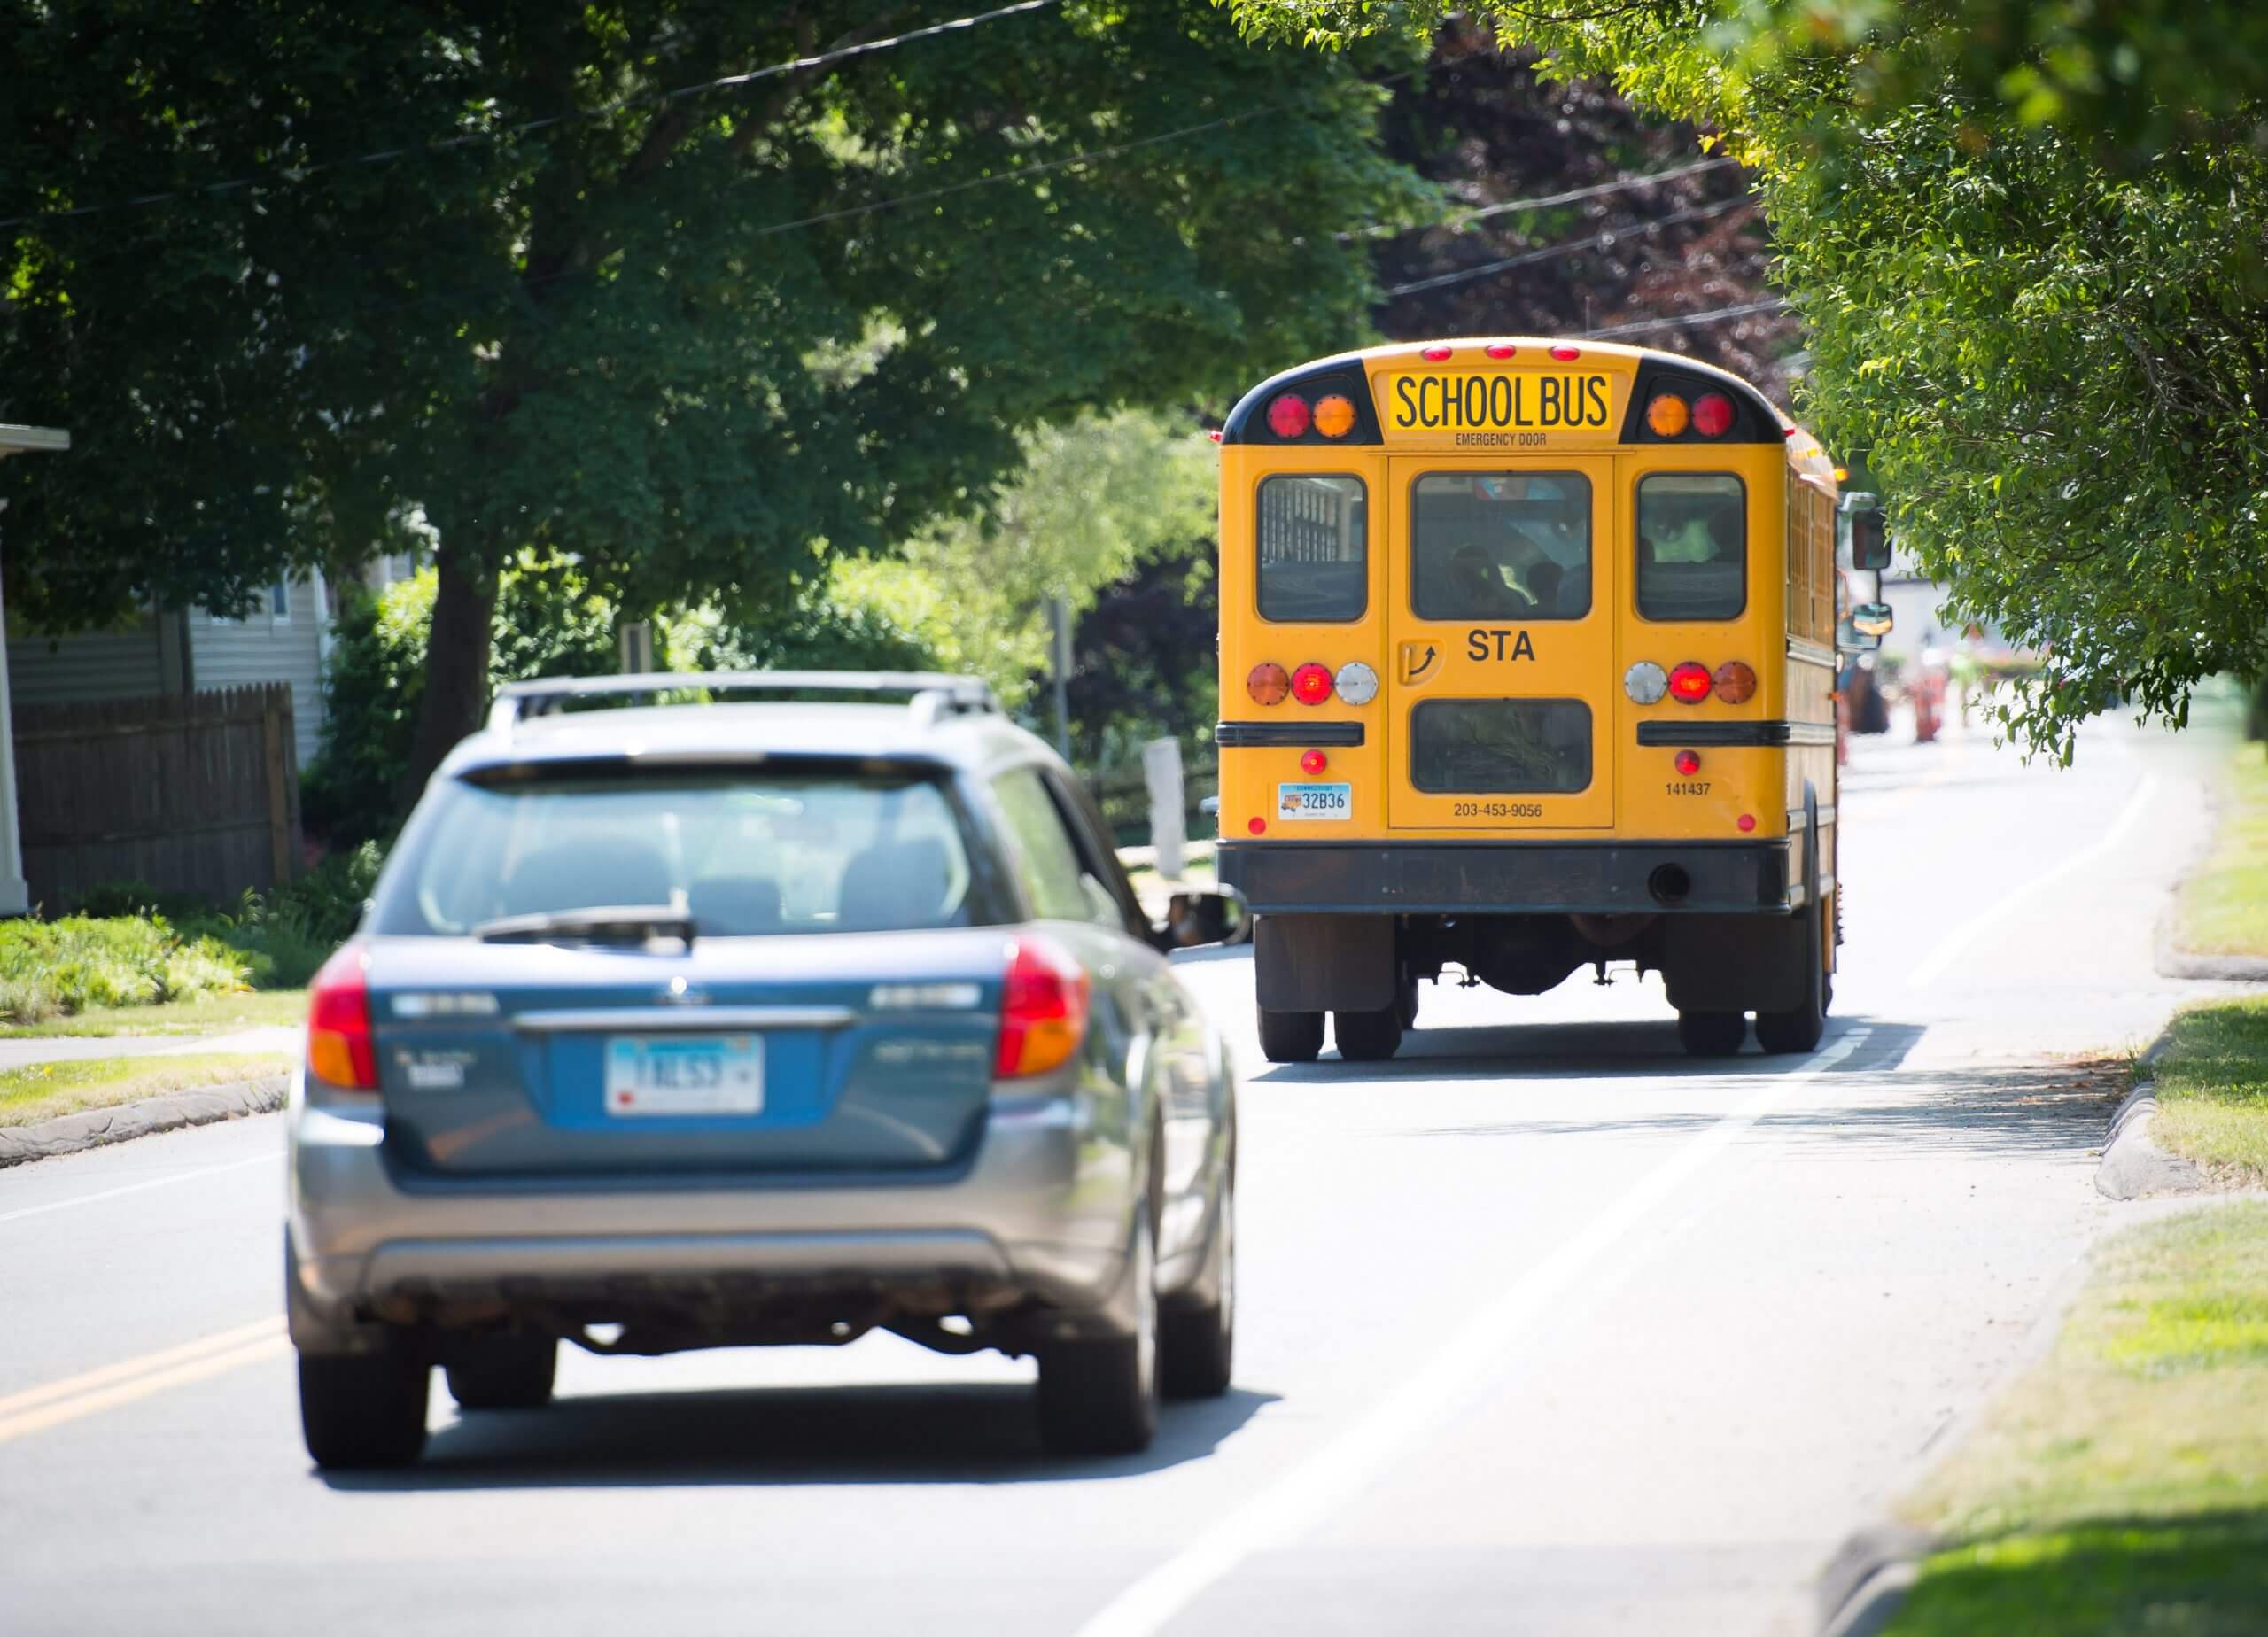 A school bus travels down the street followed by a car.